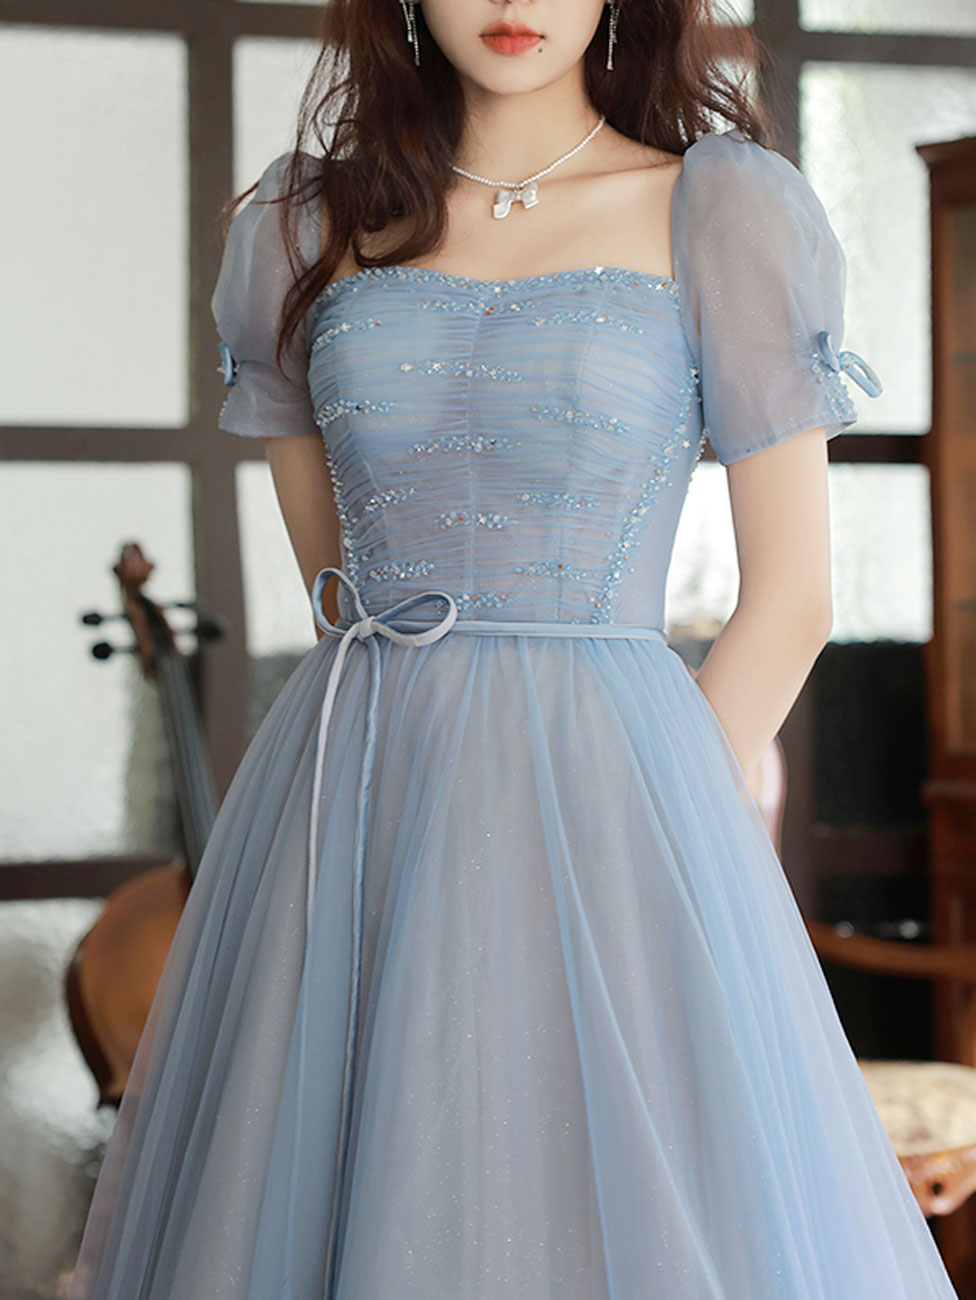 Blue A-Line Tulle Sequin Long Prom Dresses, Blue Formal Evening Dresses